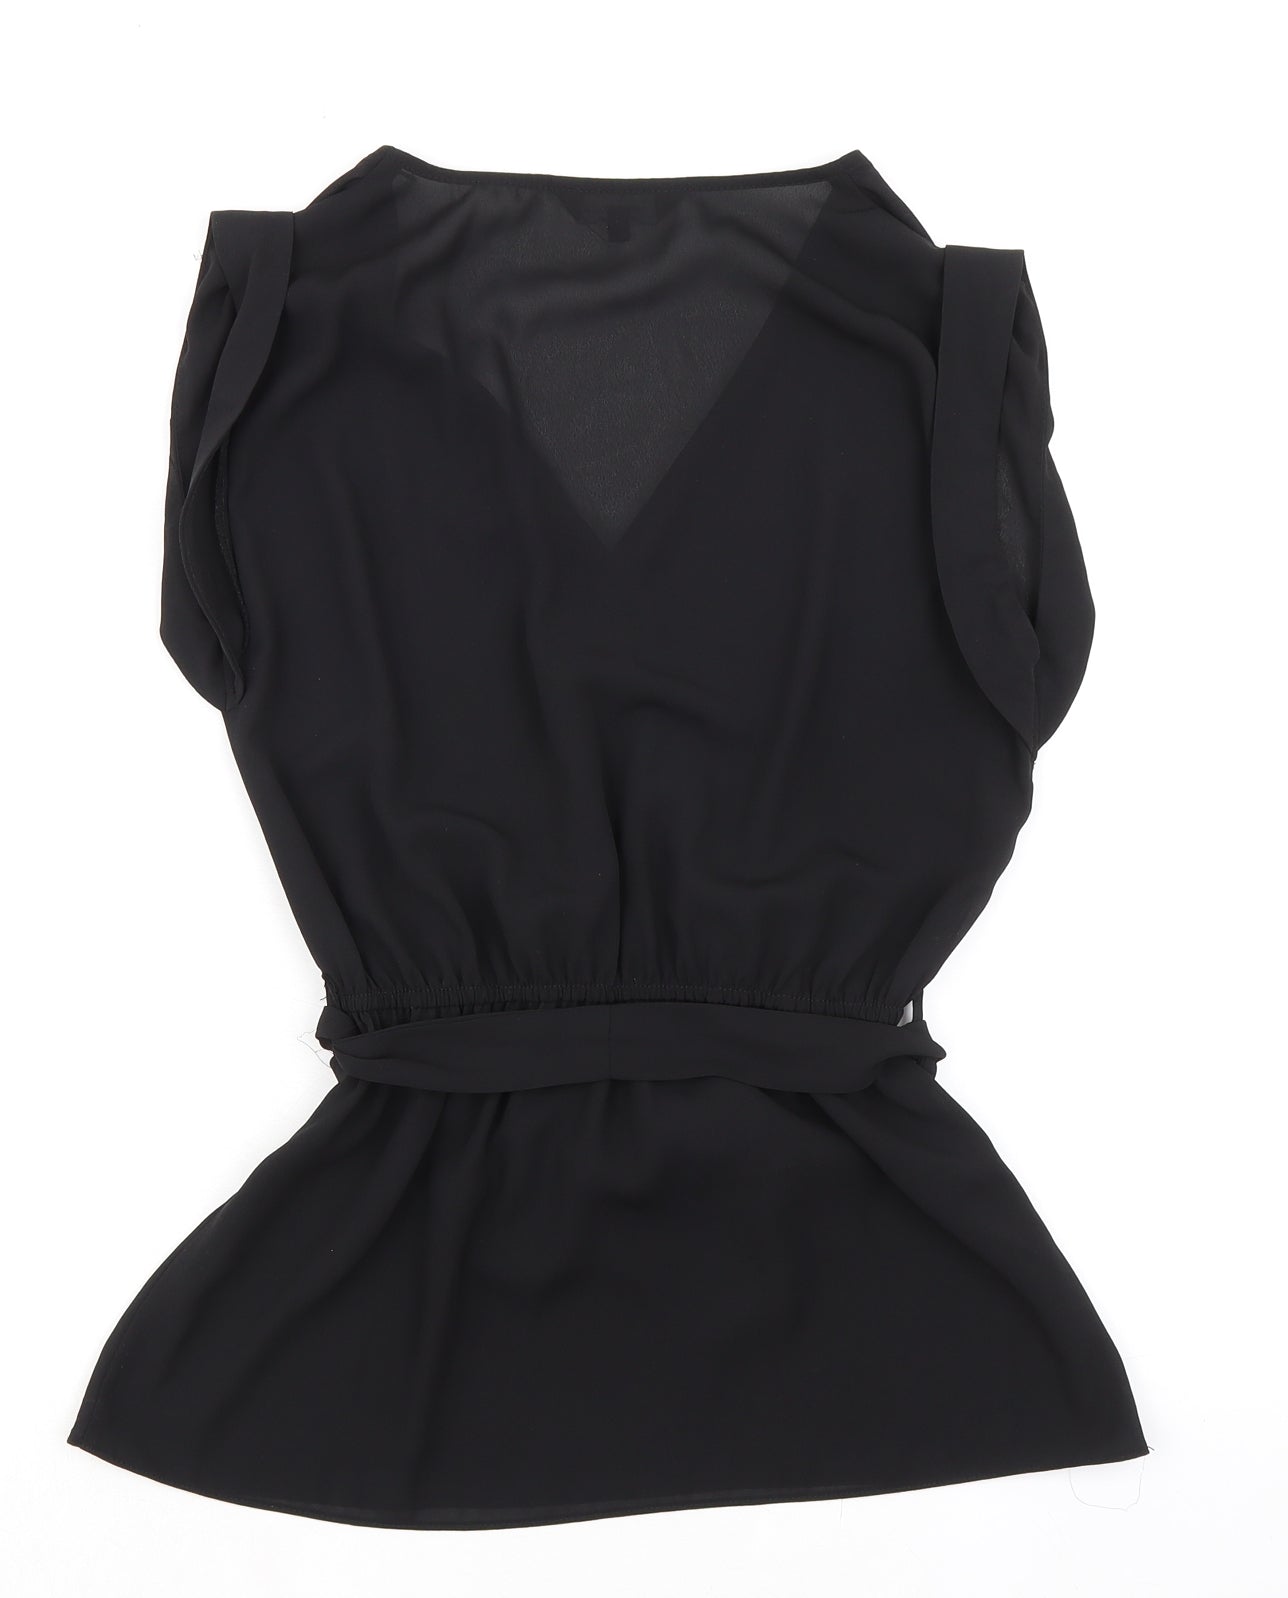 New Look Womens Black Polyester Basic Blouse Size 10 V-Neck